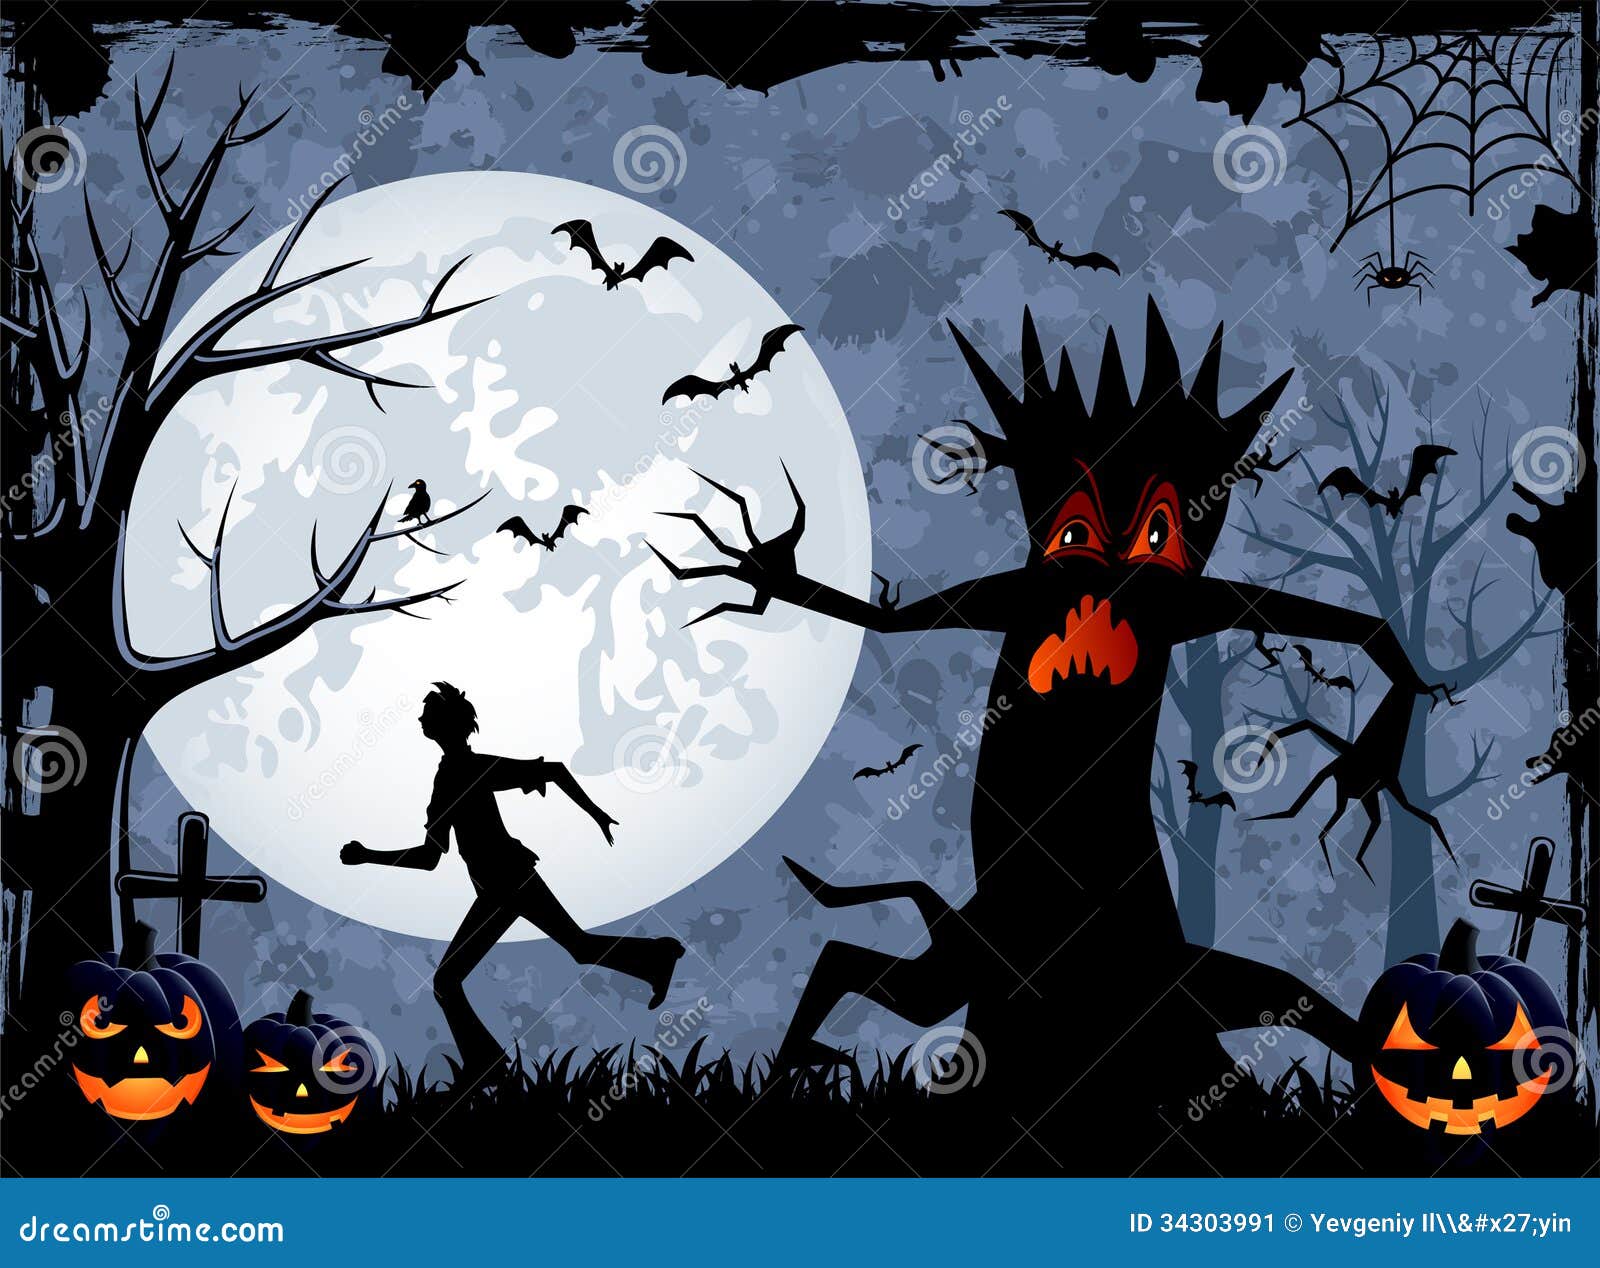  - halloween-monster-tree-background-scary-fearfulness-running-man-illustration-34303991